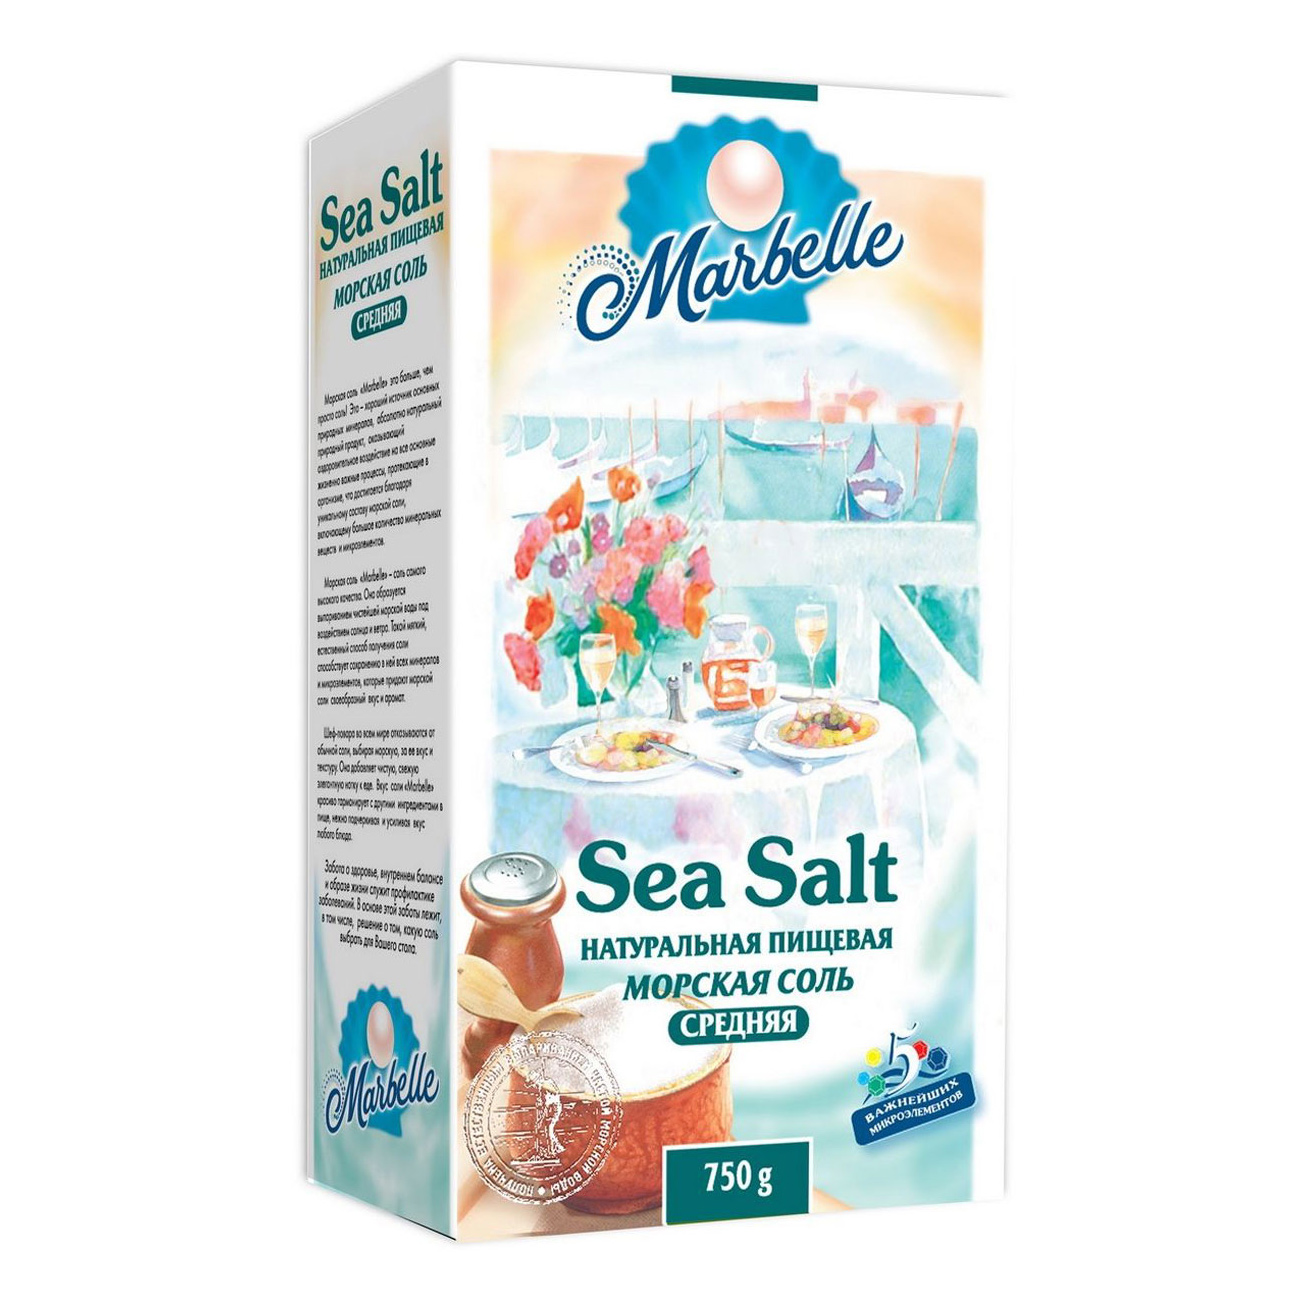 Соль Marbelle морская пищевая средняя 750 г соль морская marbelle йодированная мелкая 750 г